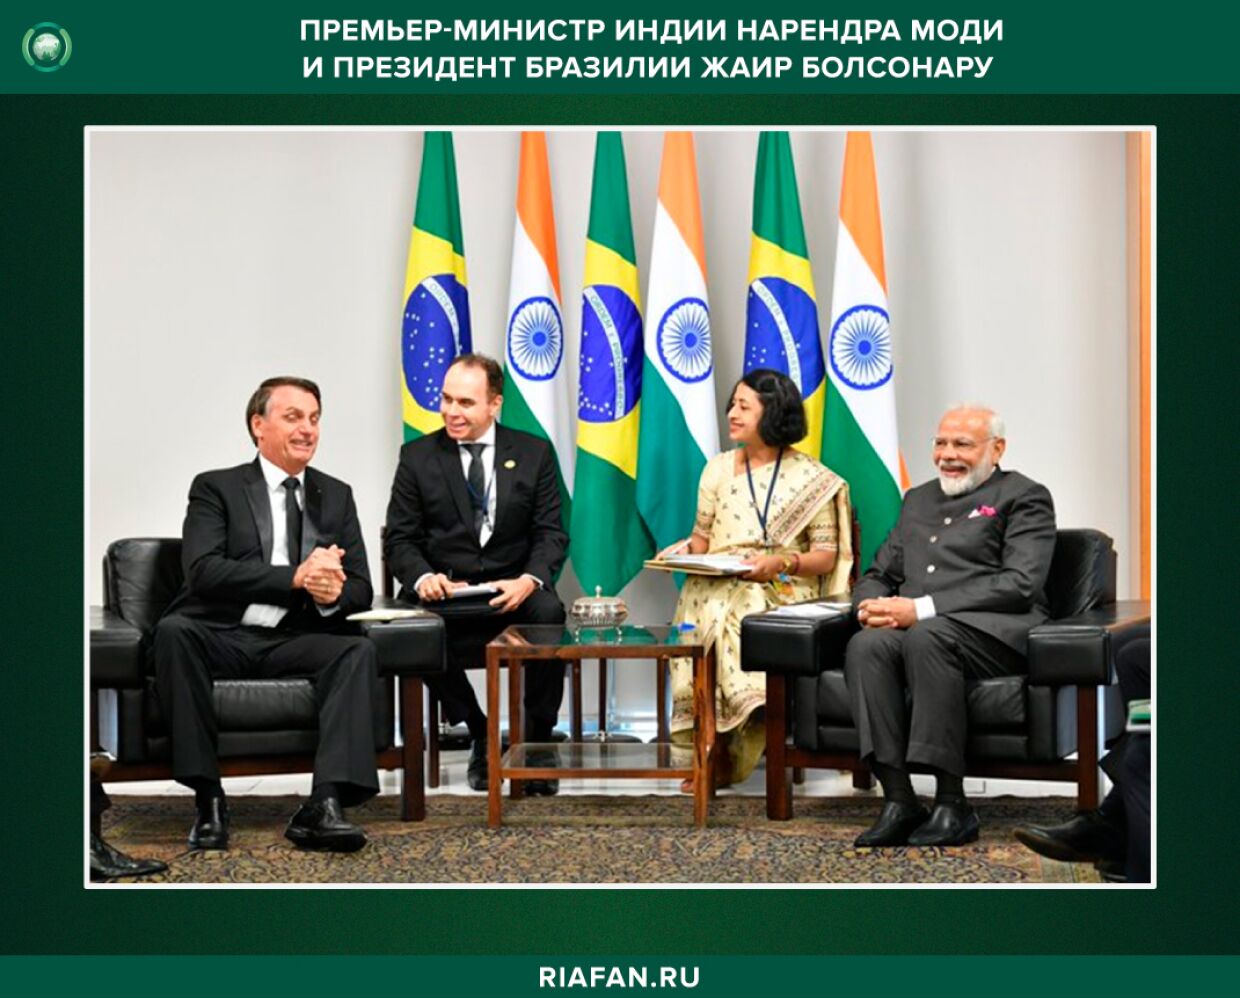 Solo negocios: India competirá con Rusia y Estados Unidos en América Latina